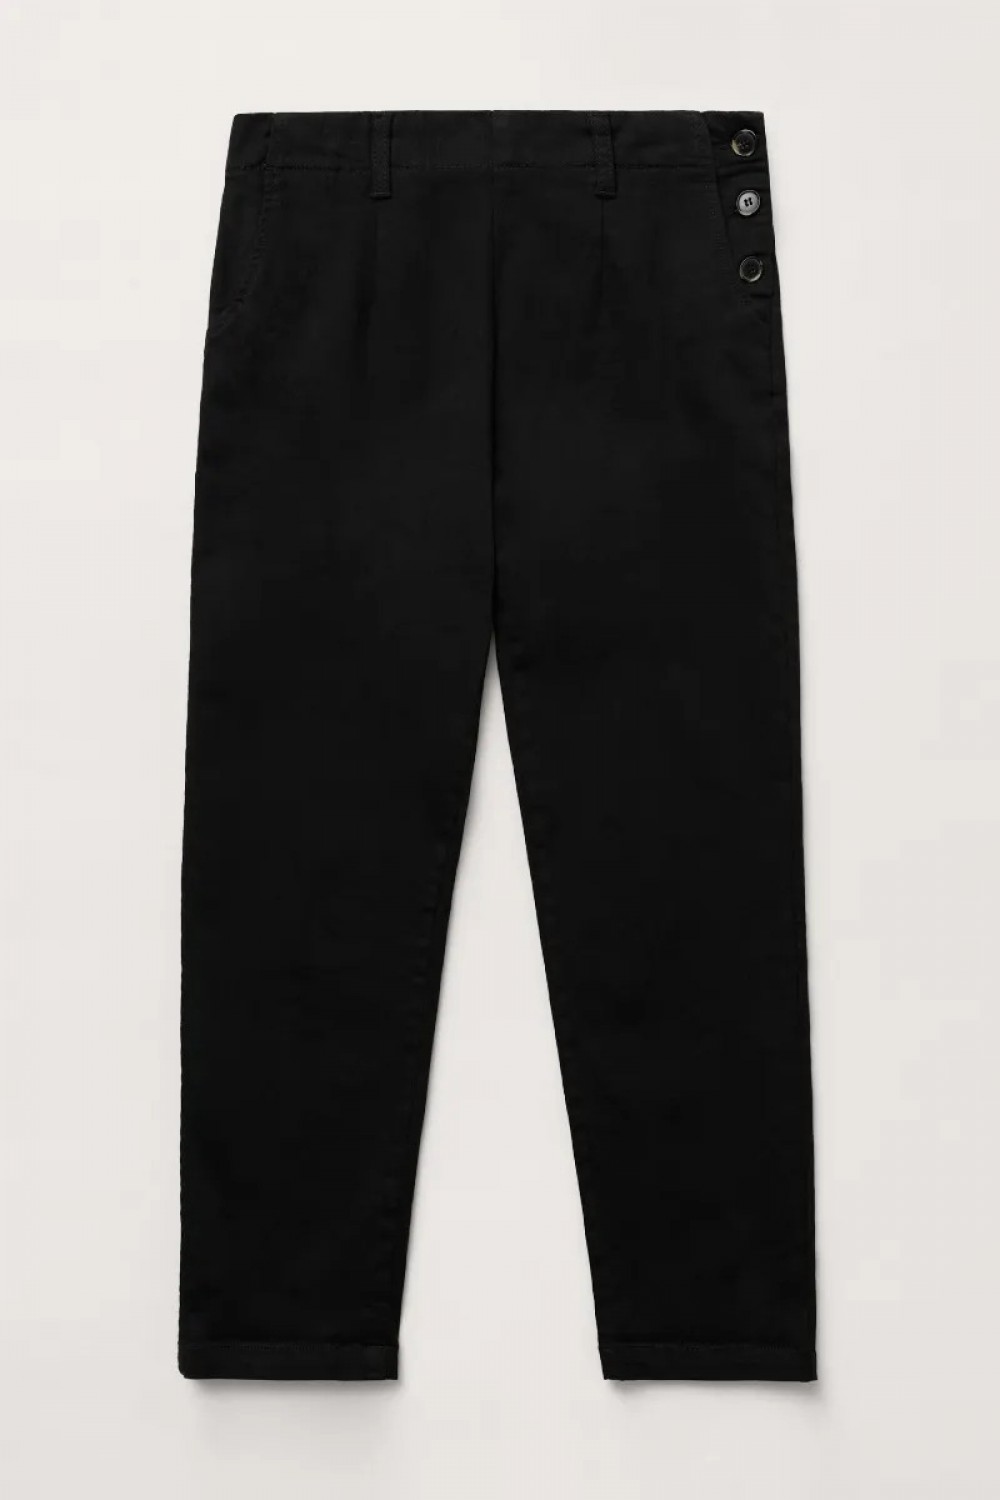 Seasalt Clothing Waterdance Trousers Black